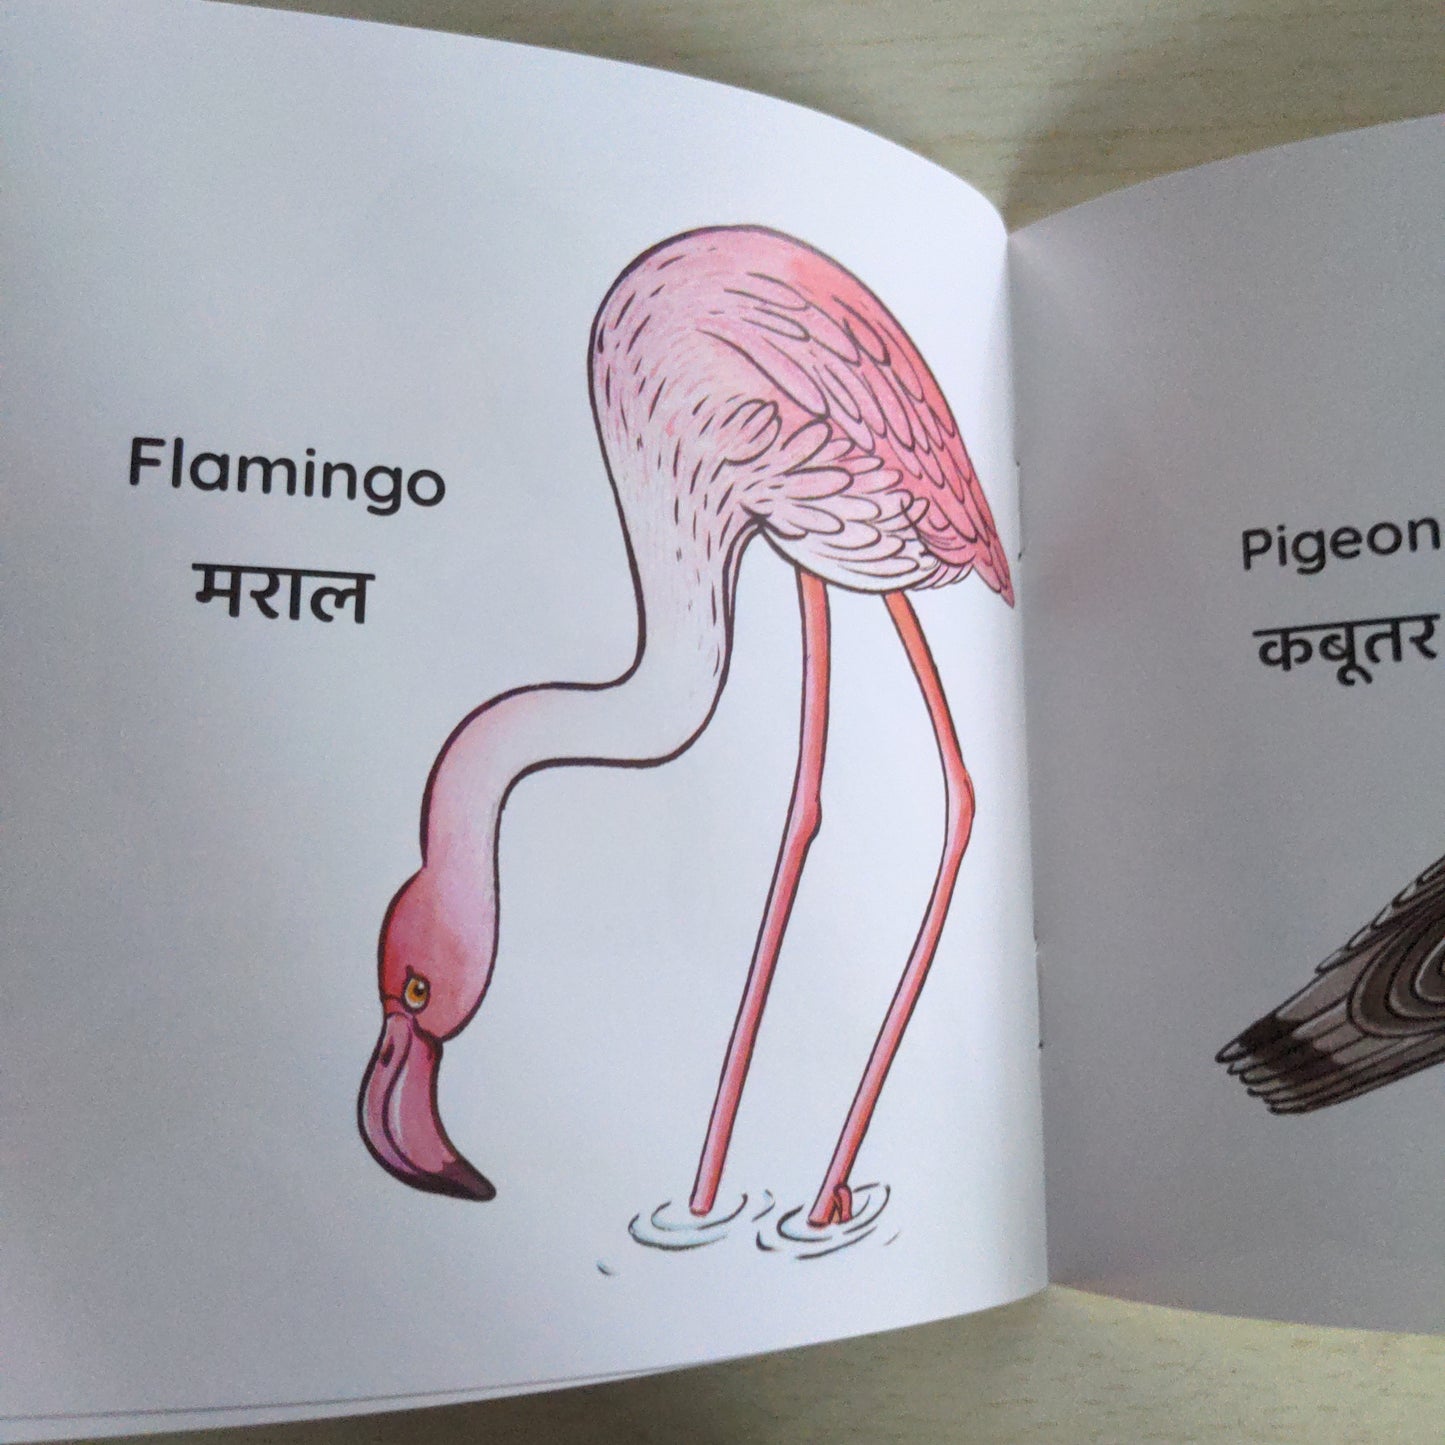 My First Book of Birds - English-Hindi